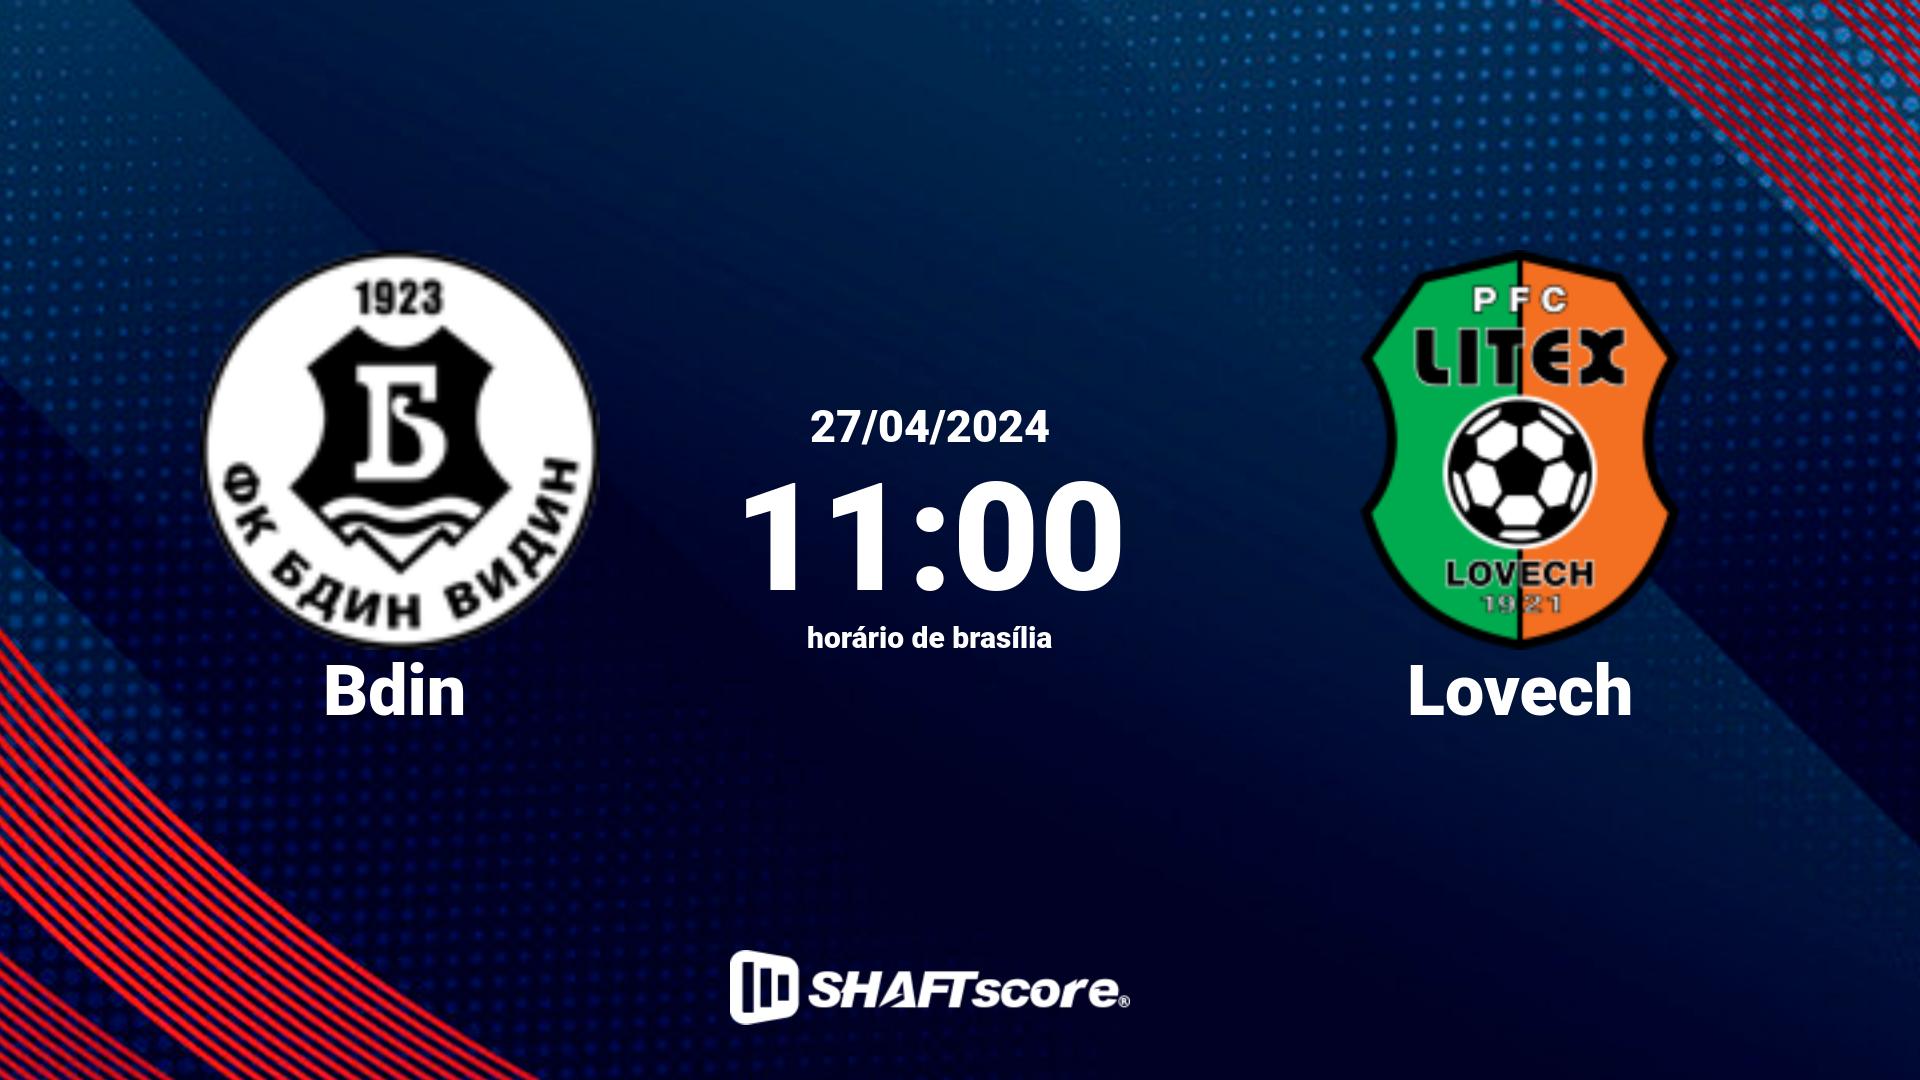 Estatísticas do jogo Bdin vs Lovech 27.04 11:00